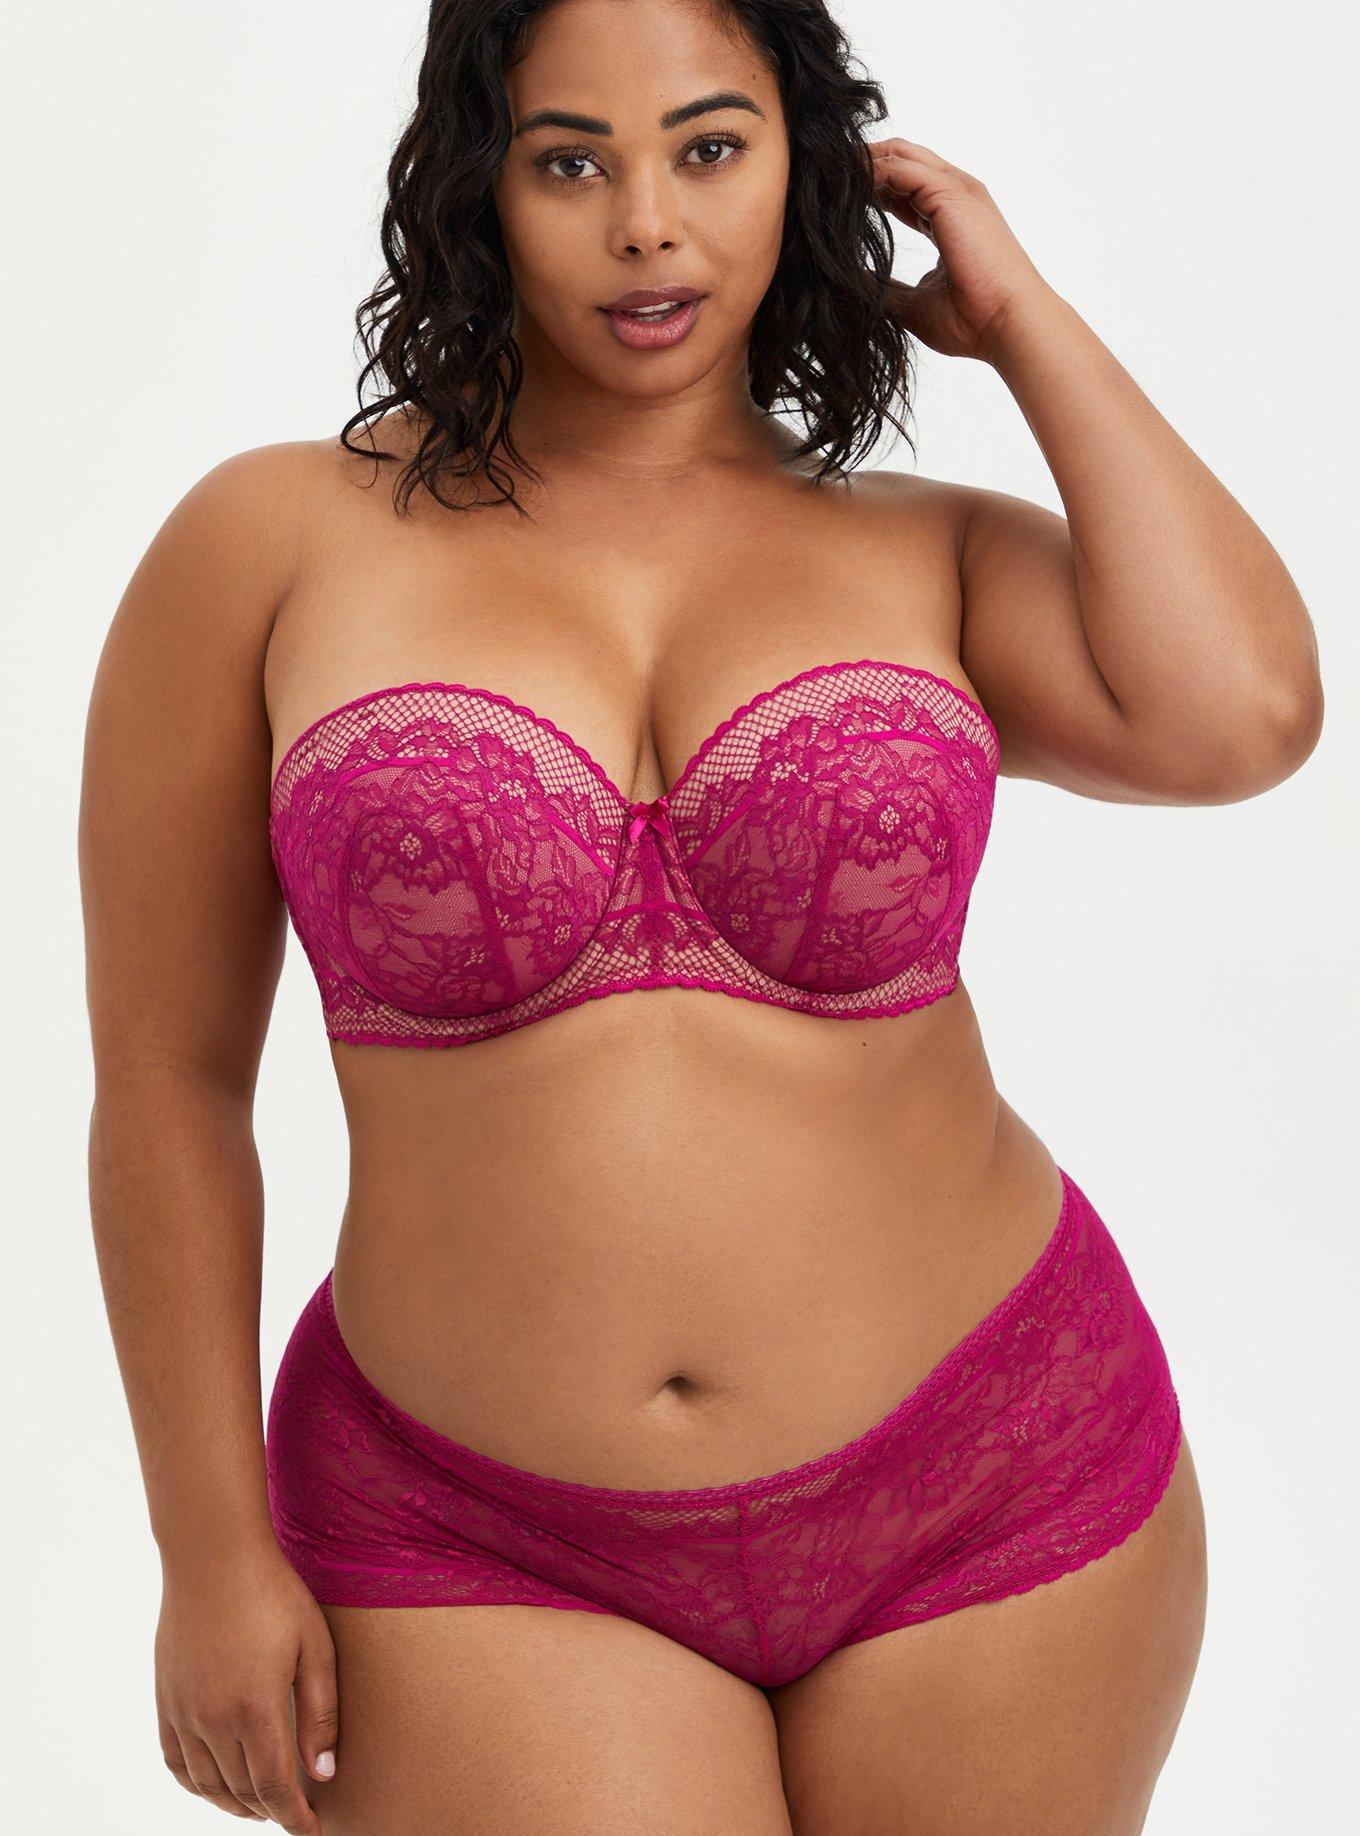 Torrid Curves Blush Pink Lace Strapless Underwire Bra 44B Size